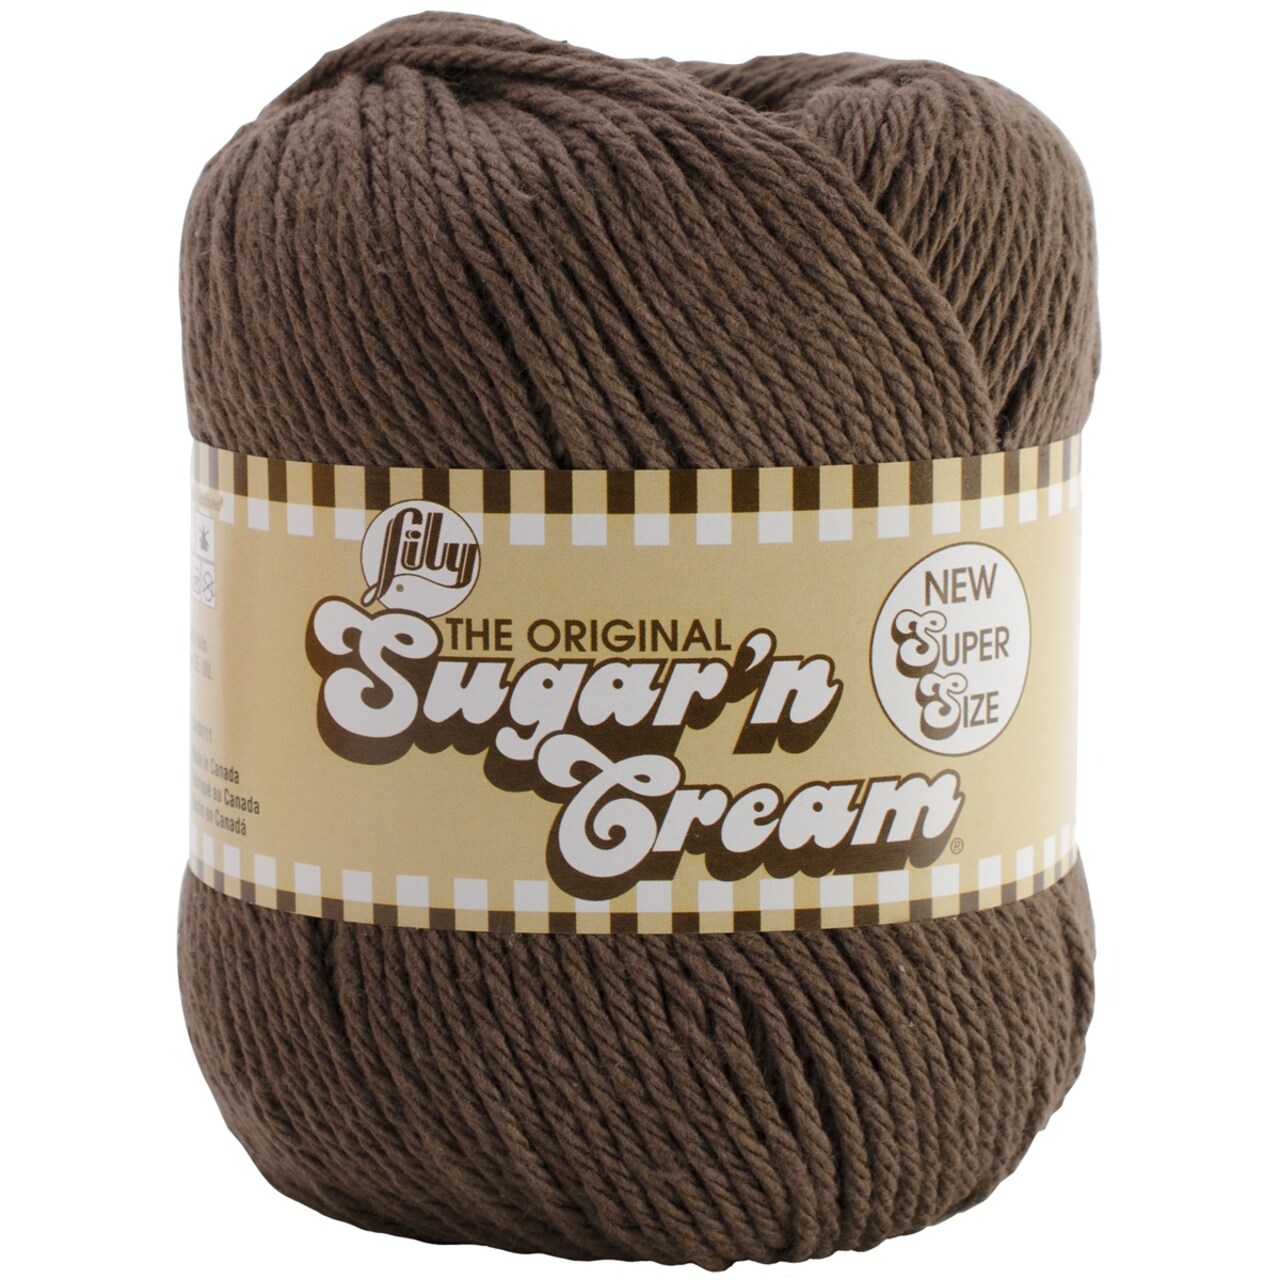 Lily Sugar'N Cream Super Size Warm Brown Yarn - 6 Pack of 113g/4oz - Cotton  - 4 Medium (Worsted) - 200 Yards - Knitting/Crochet